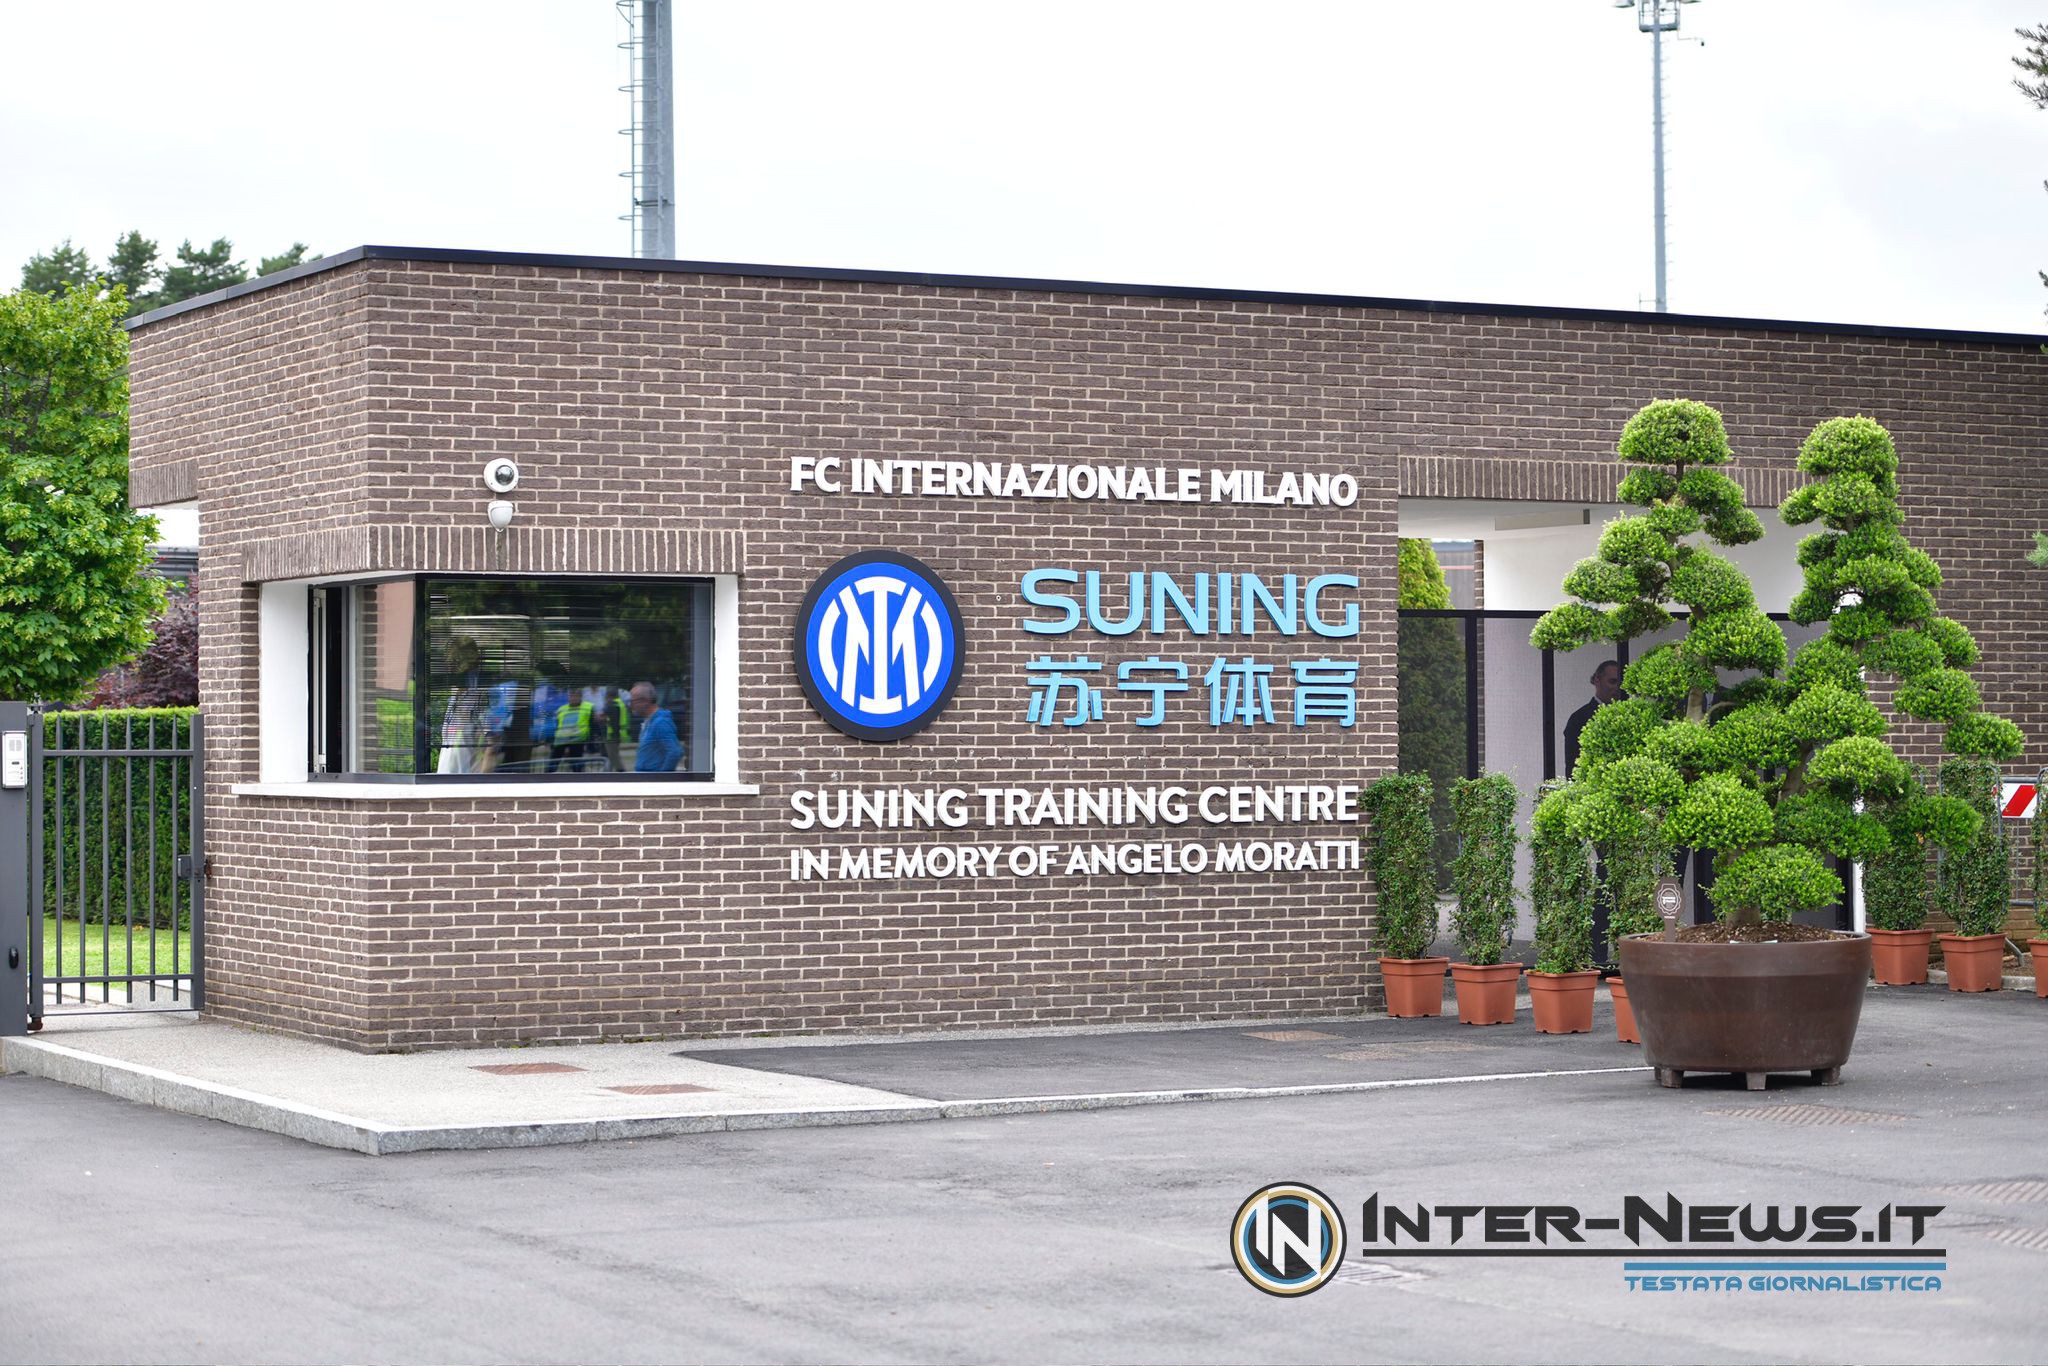 Suning Training Centre - Inter